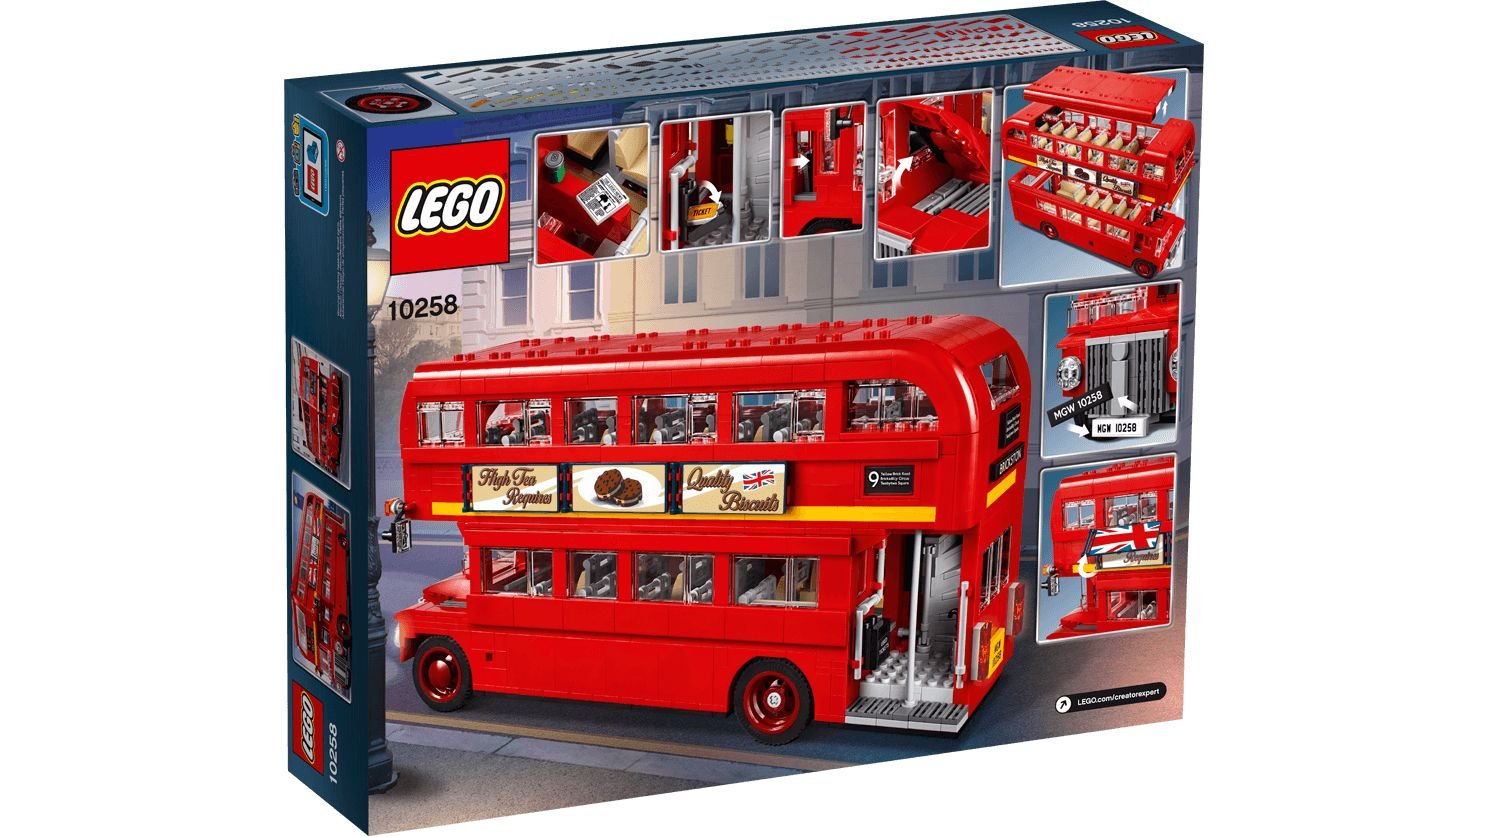 LEGO Advanced Models 10258 Doppeldecker Bus LEGO_10258_Box5_v39_1488.jpg